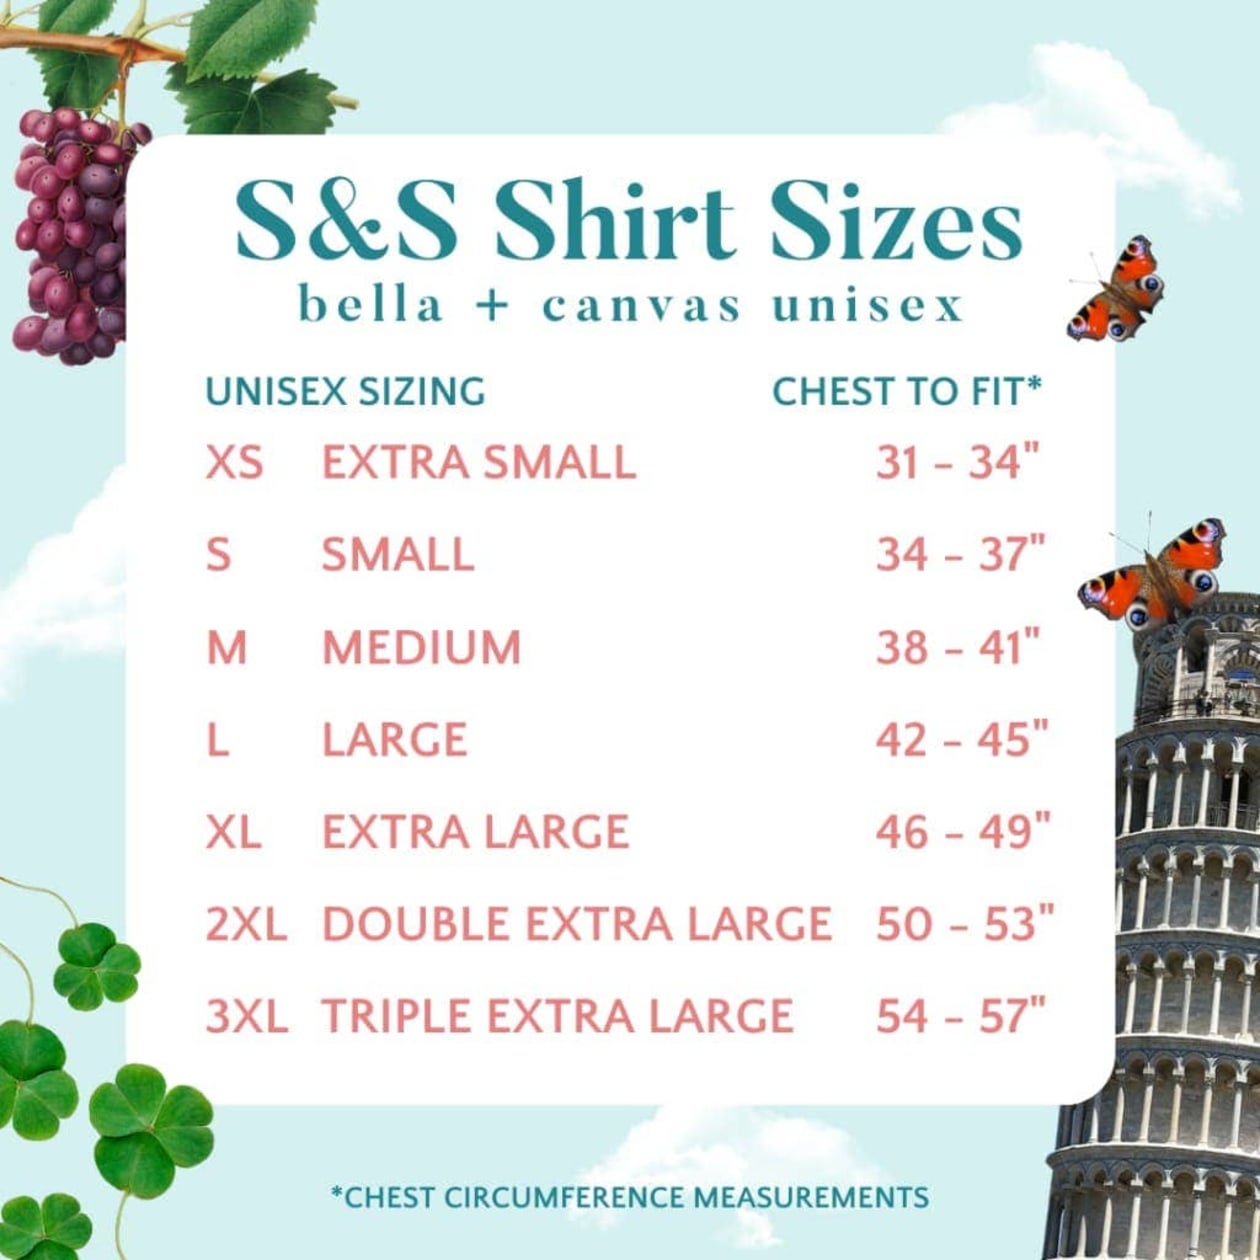 S-3X See You On The Flippity Flip Unisex T-Shirt Heather Mustard Size S-3XL | Smartass & Sass at GetBullish